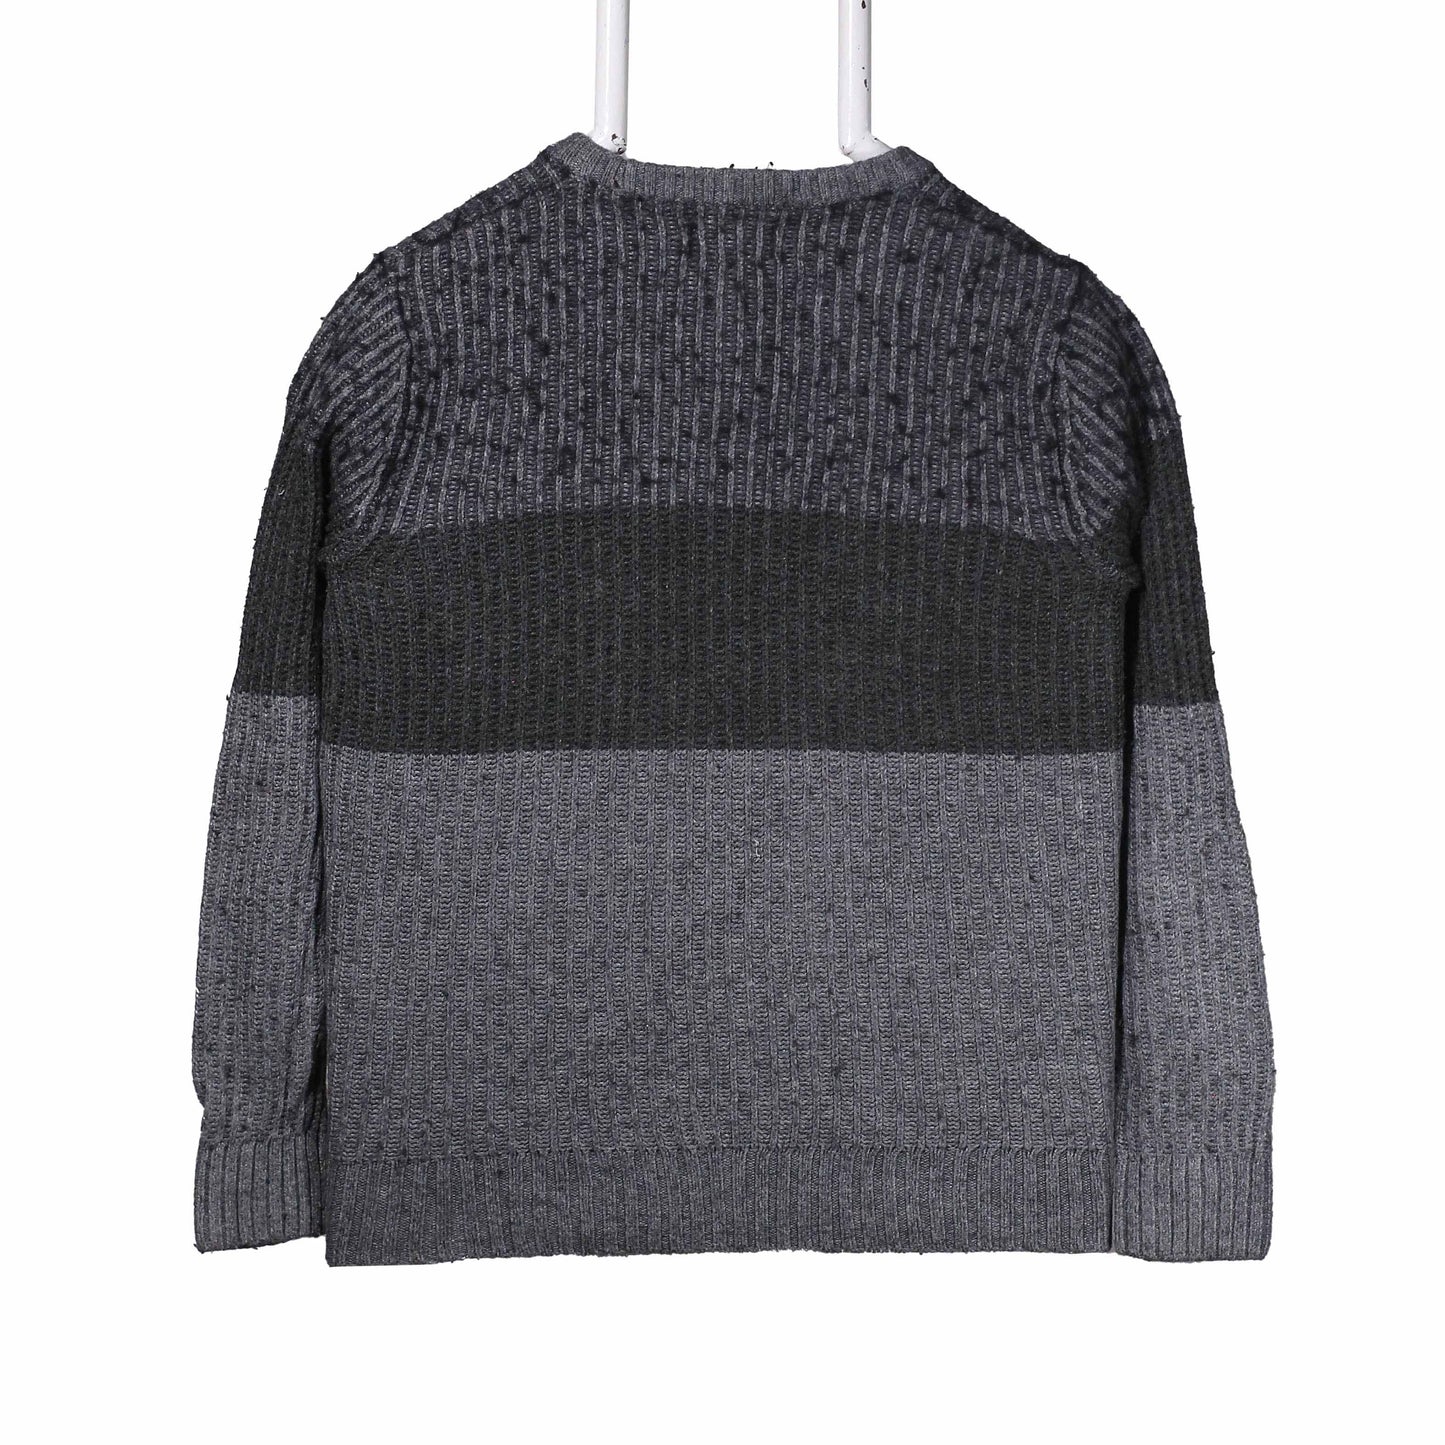 H&M Grey Sweatshirt